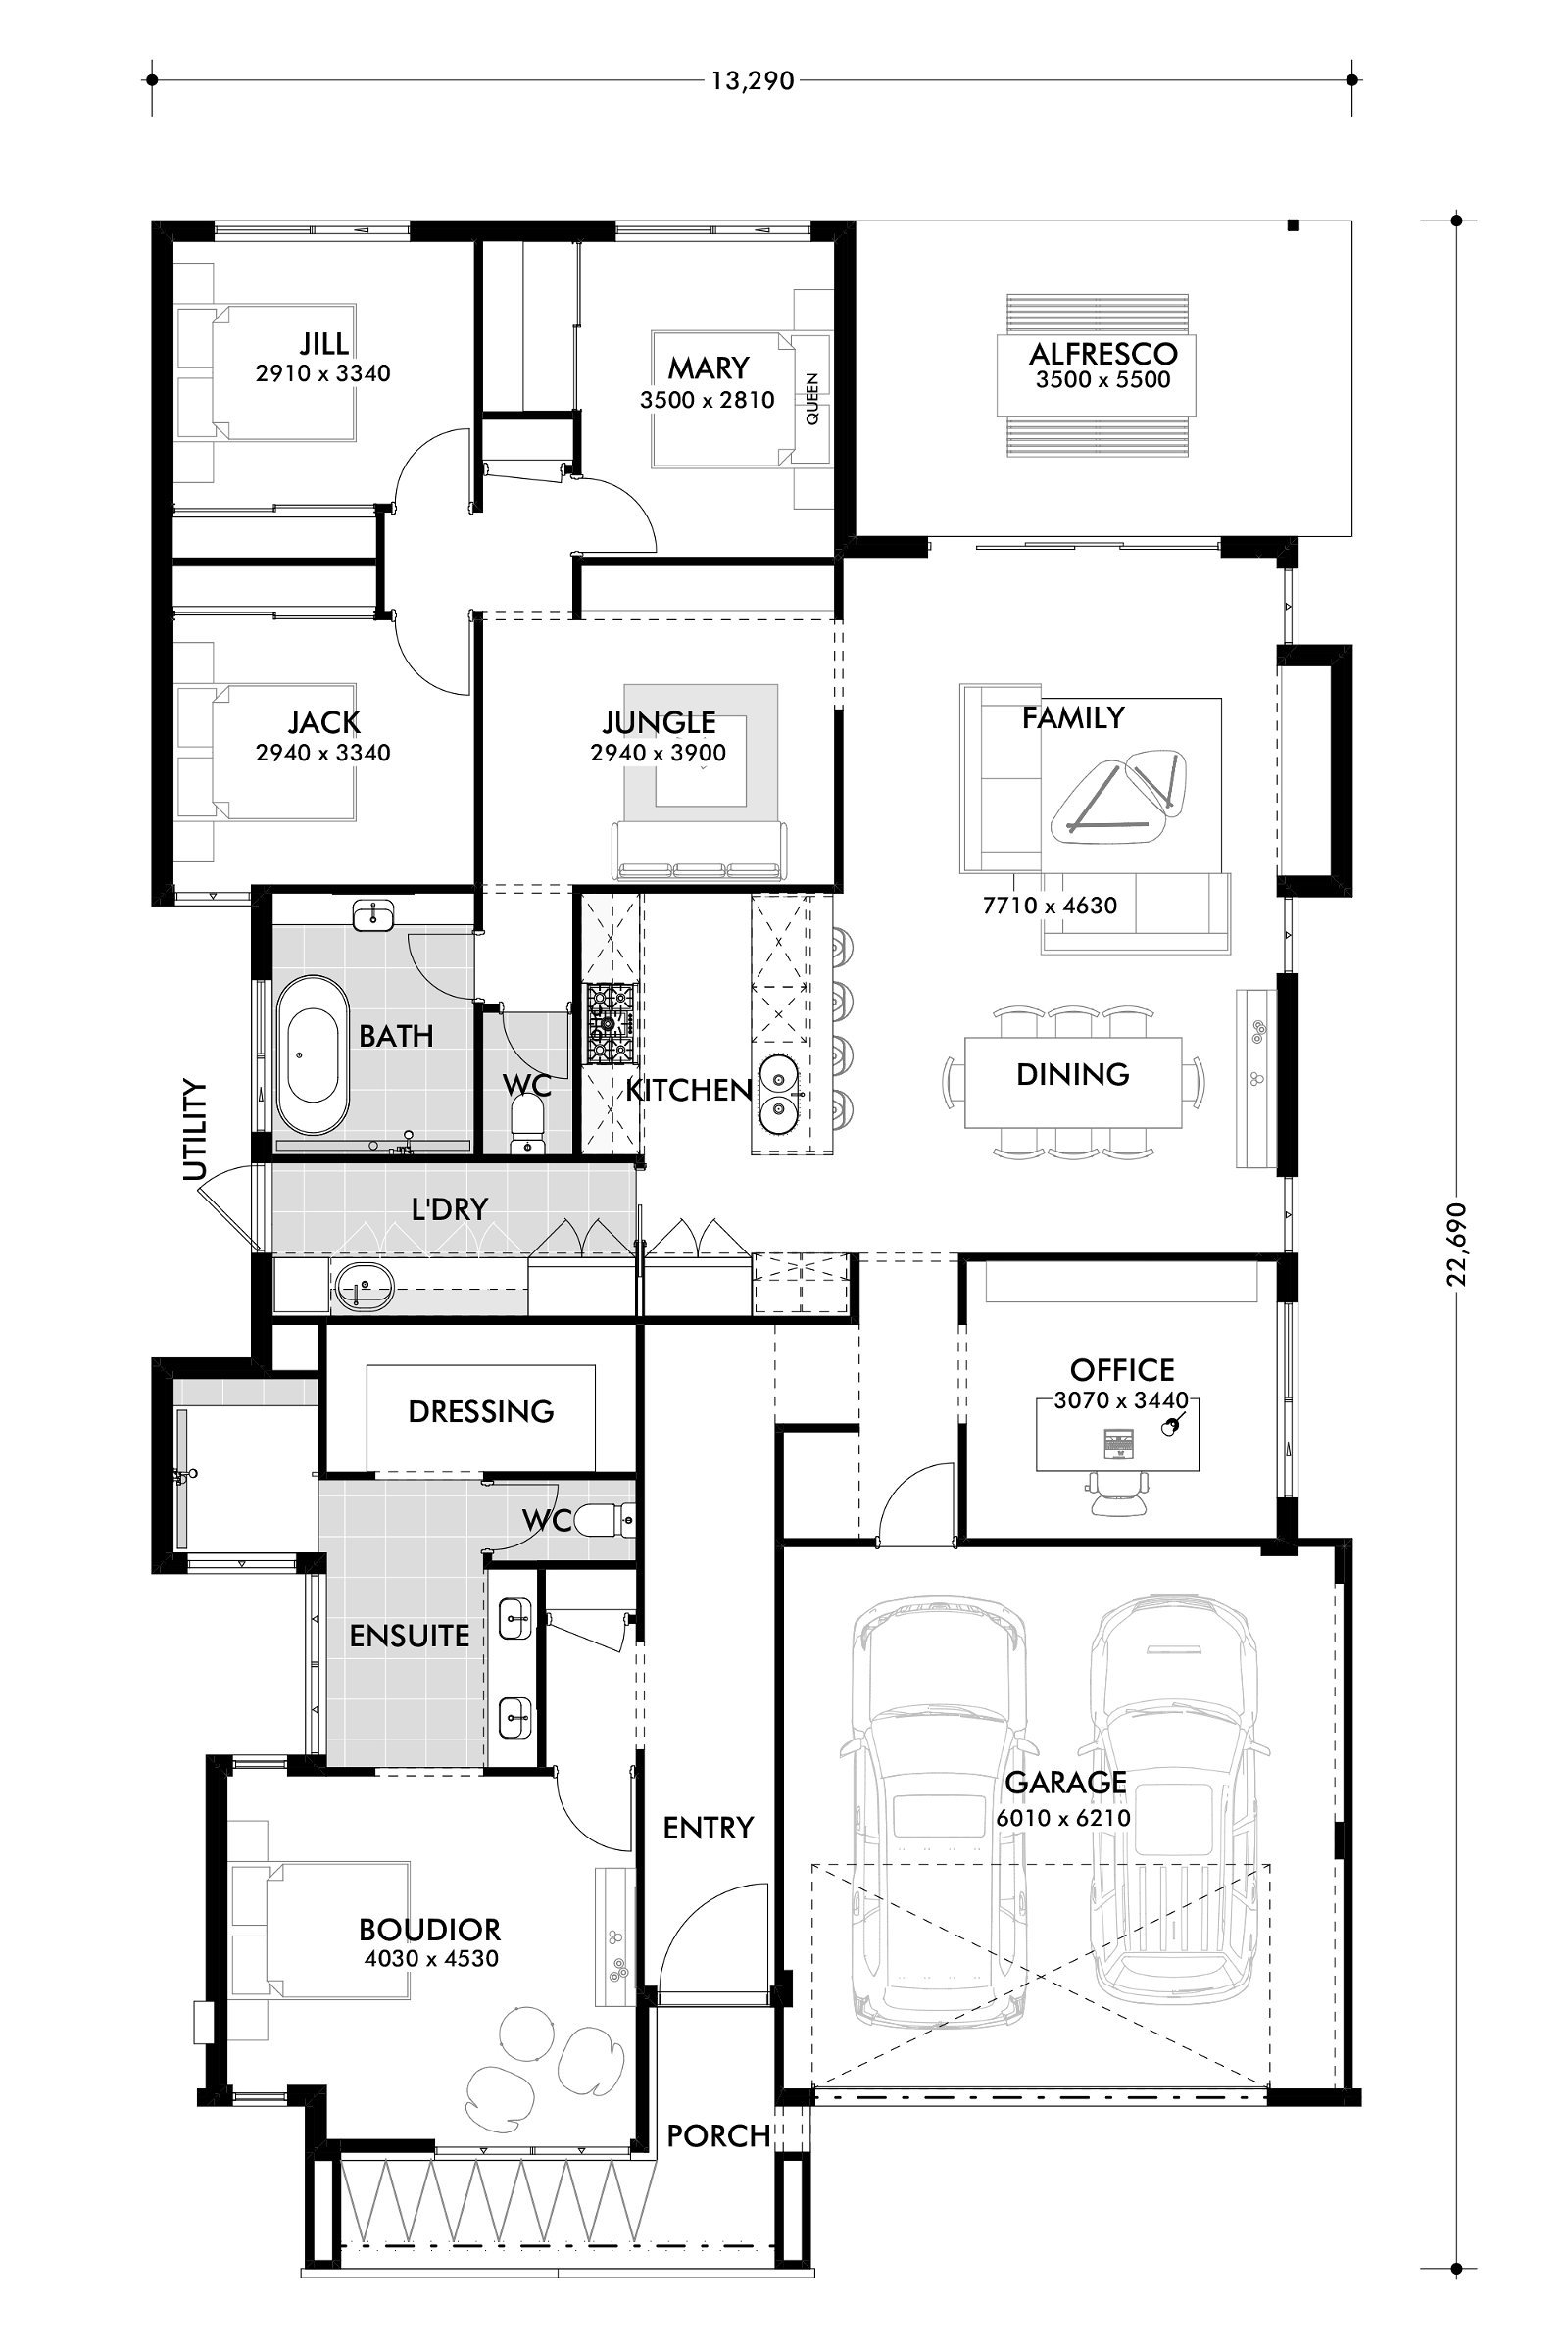 Residential Attitudes - The Yardstick - Floorplan - Yardstick Floorplan Website